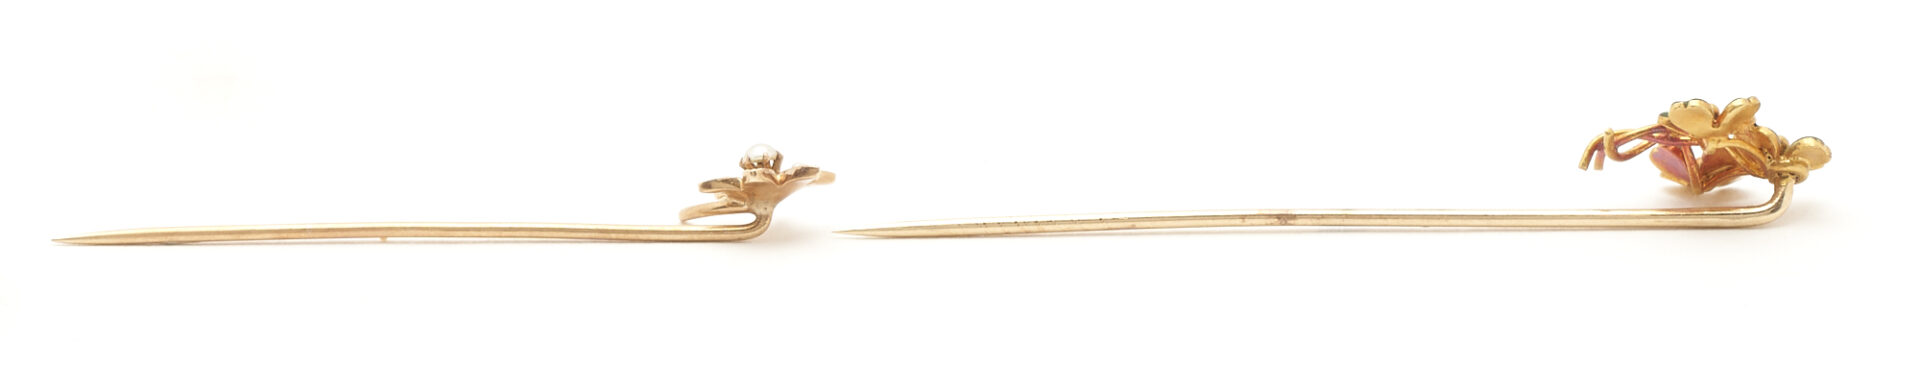 Lot 79: 5 Ladies' Gold Brooch & Stick Pin Items